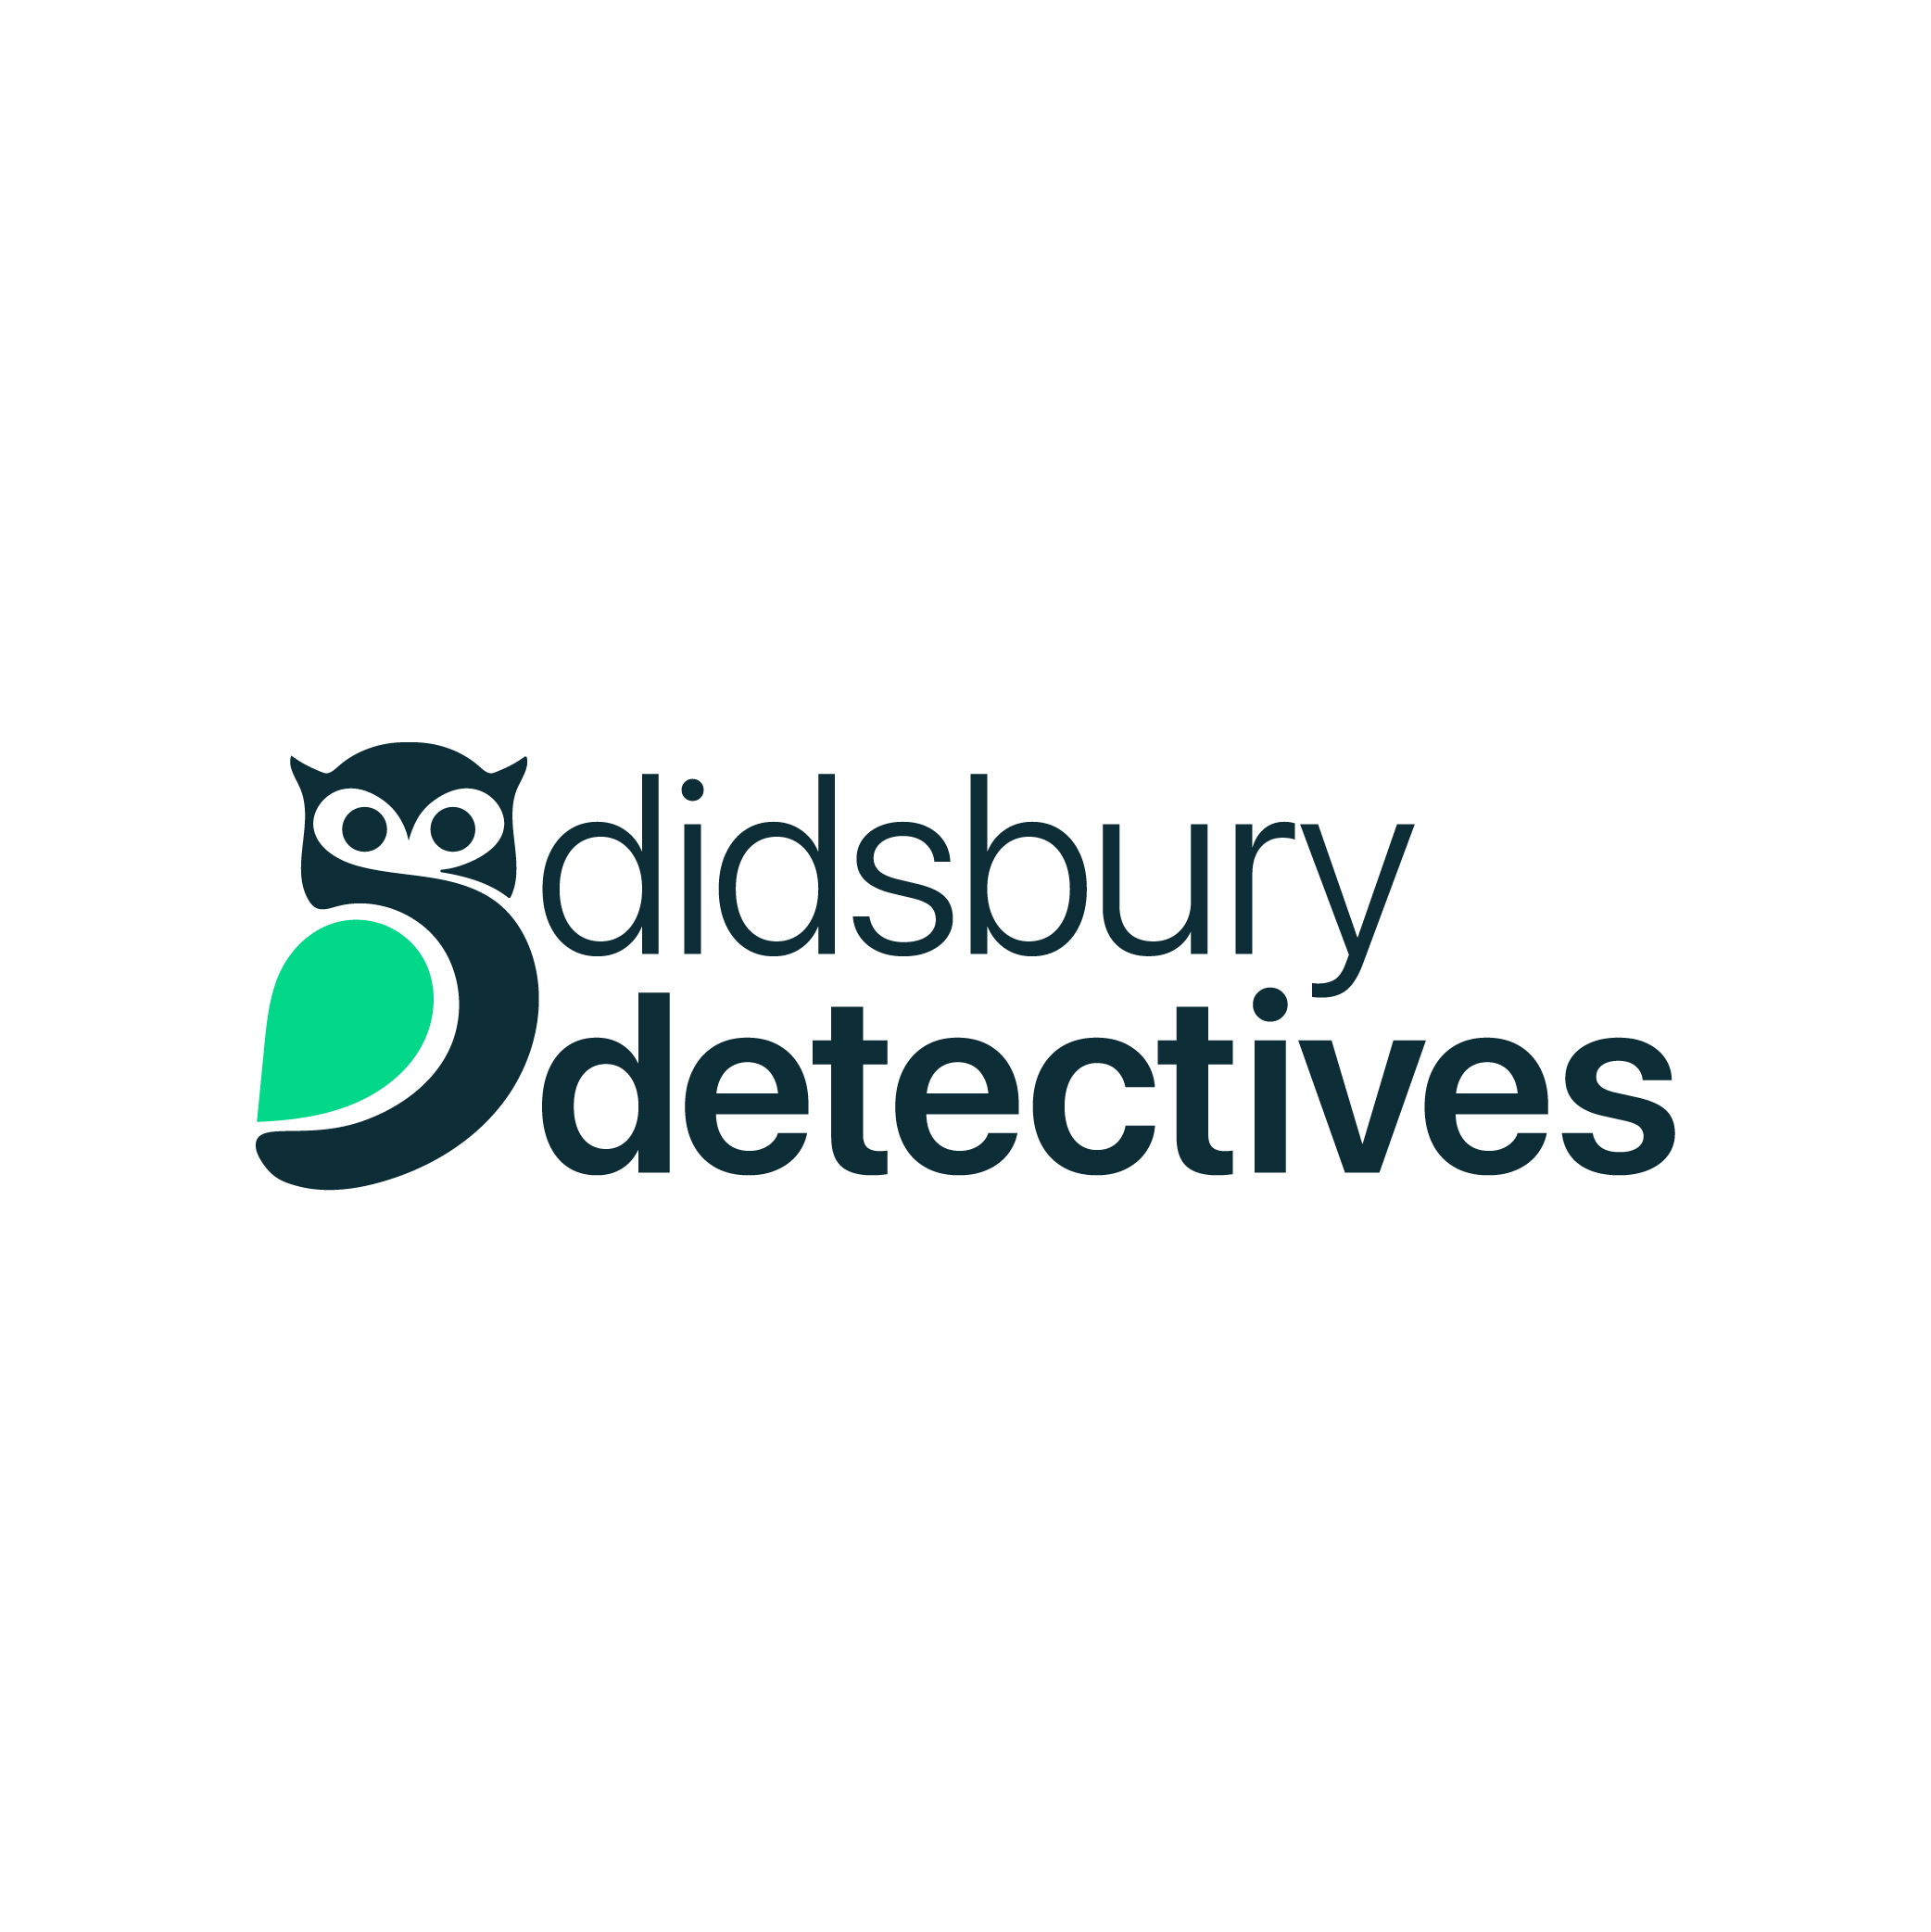 Didsbury Detectives